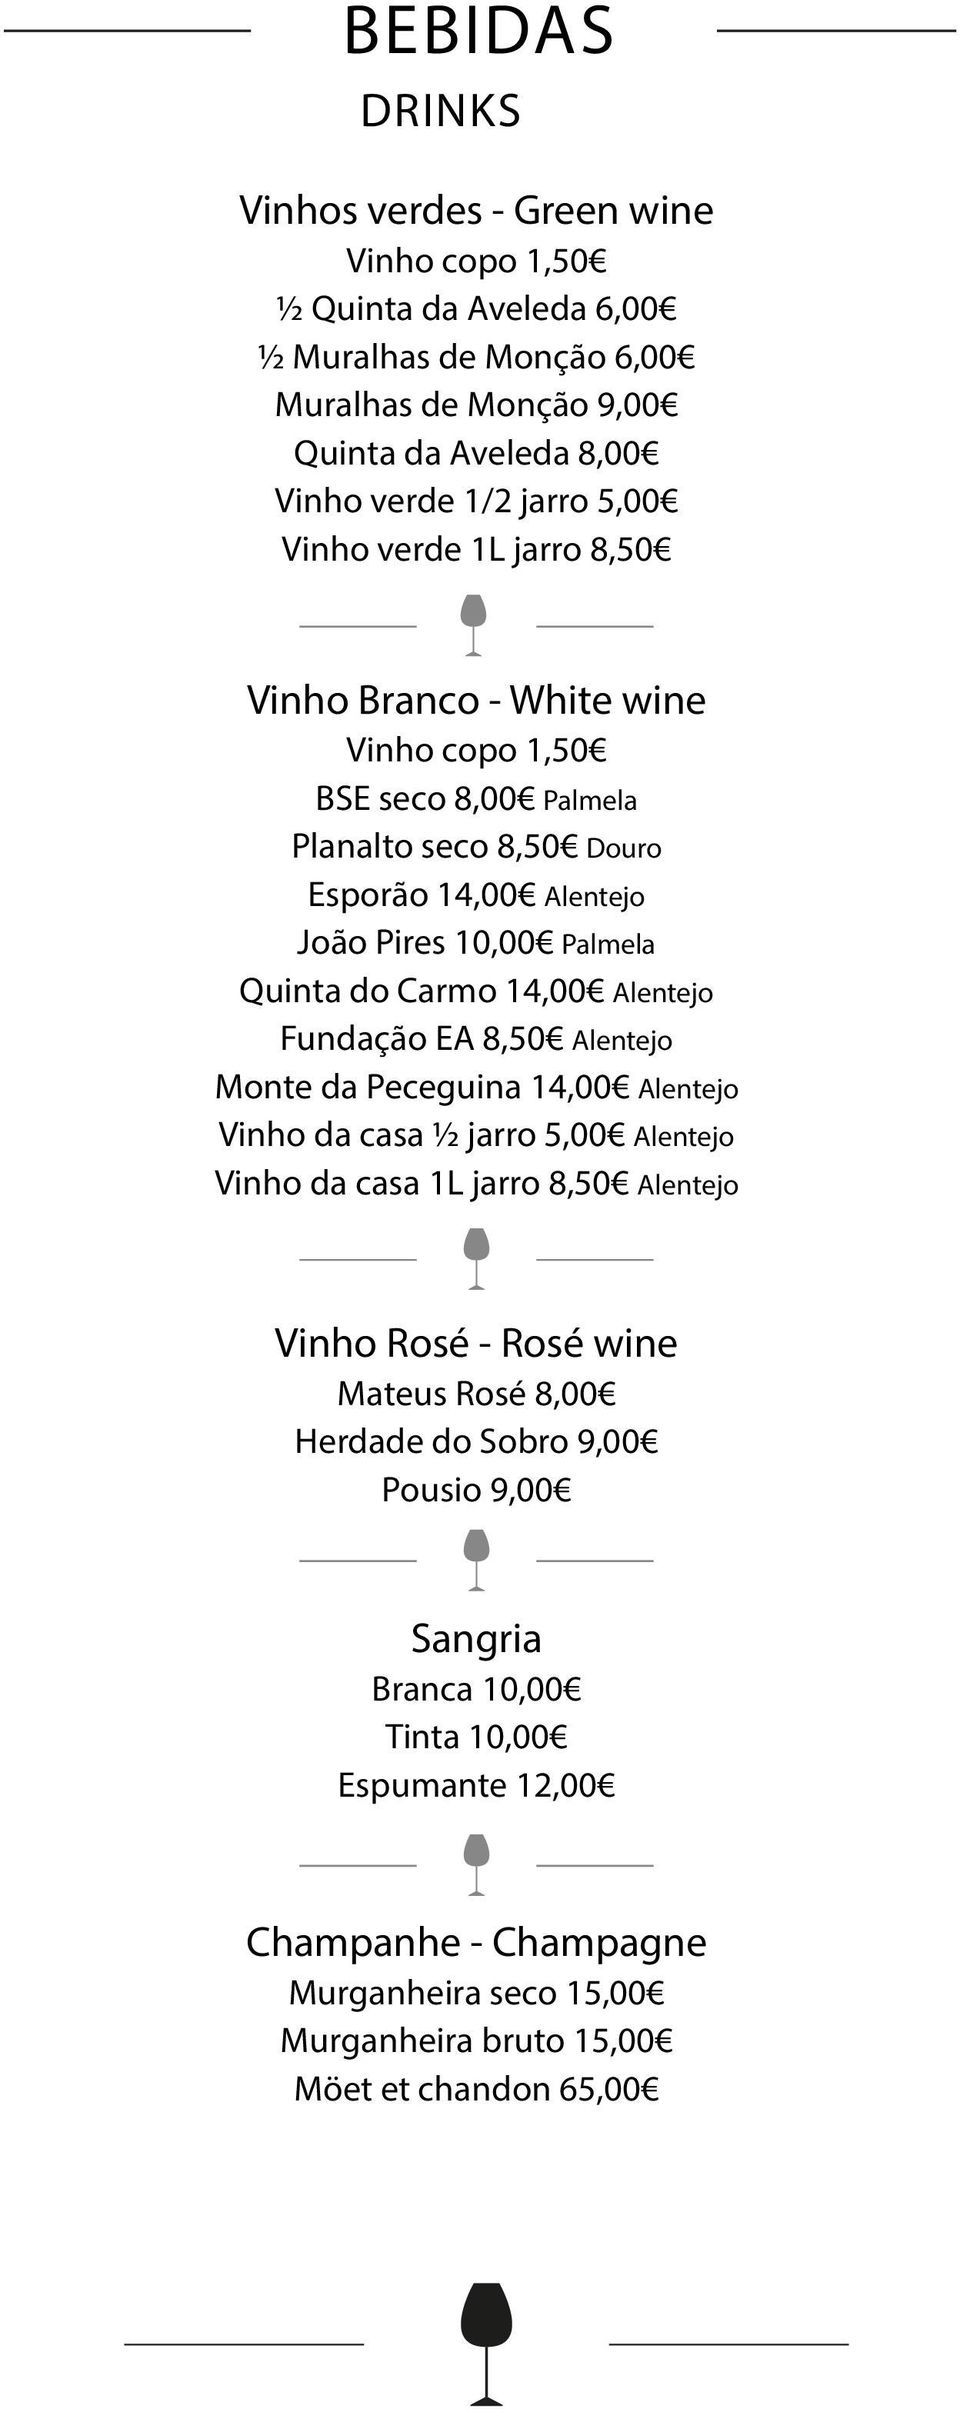 Carmo 14,00 Alentejo Fundação EA 8,50 Alentejo Monte da Peceguina 14,00 Alentejo Vinho da casa ½ jarro 5,00 Alentejo Vinho da casa 1L jarro 8,50 Alentejo Vinho Rosé - Rosé wine